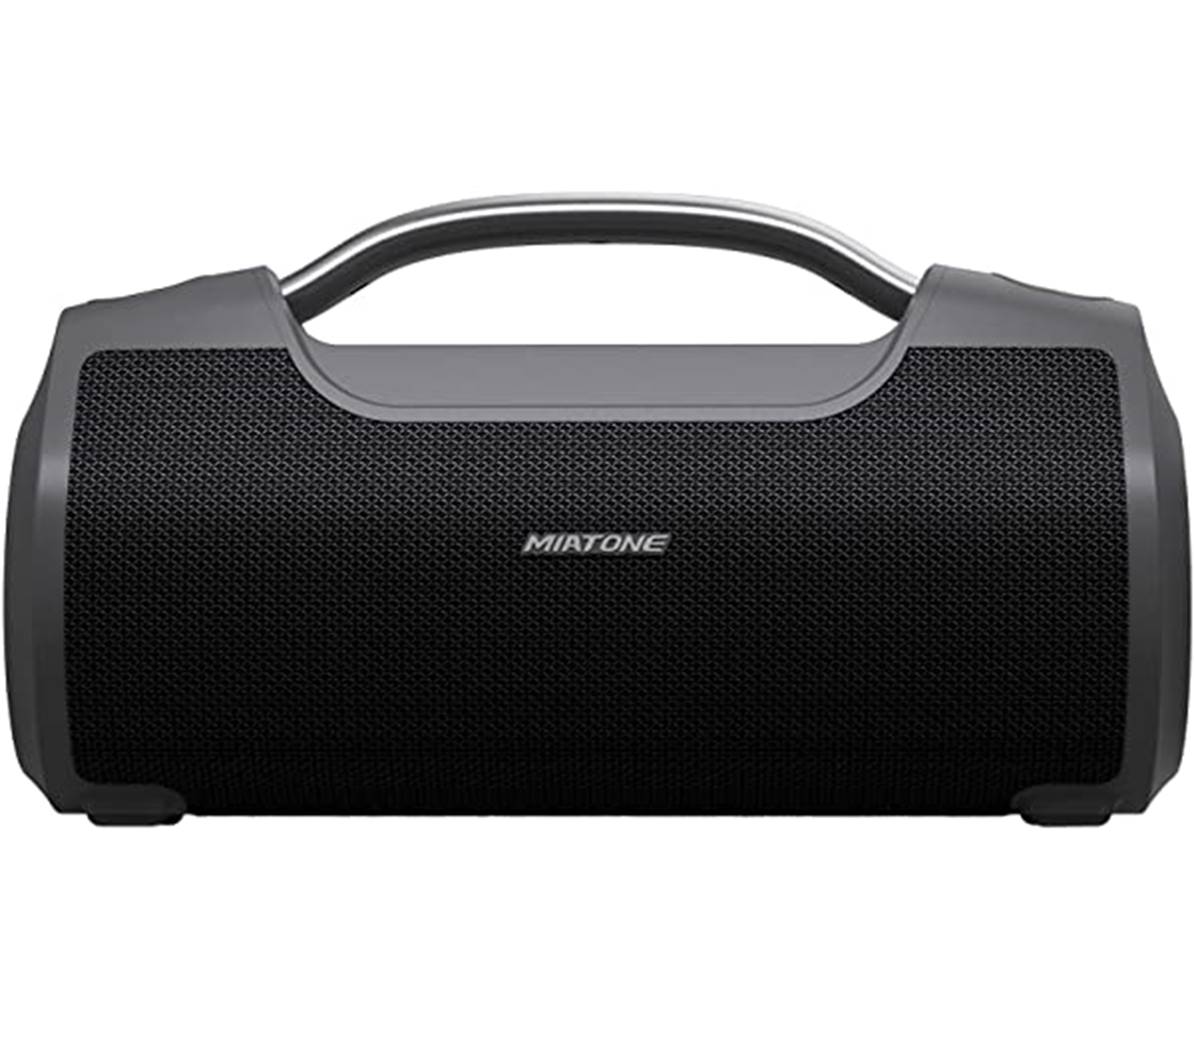 MIATONE 60W Portable Bluetooth Speaker